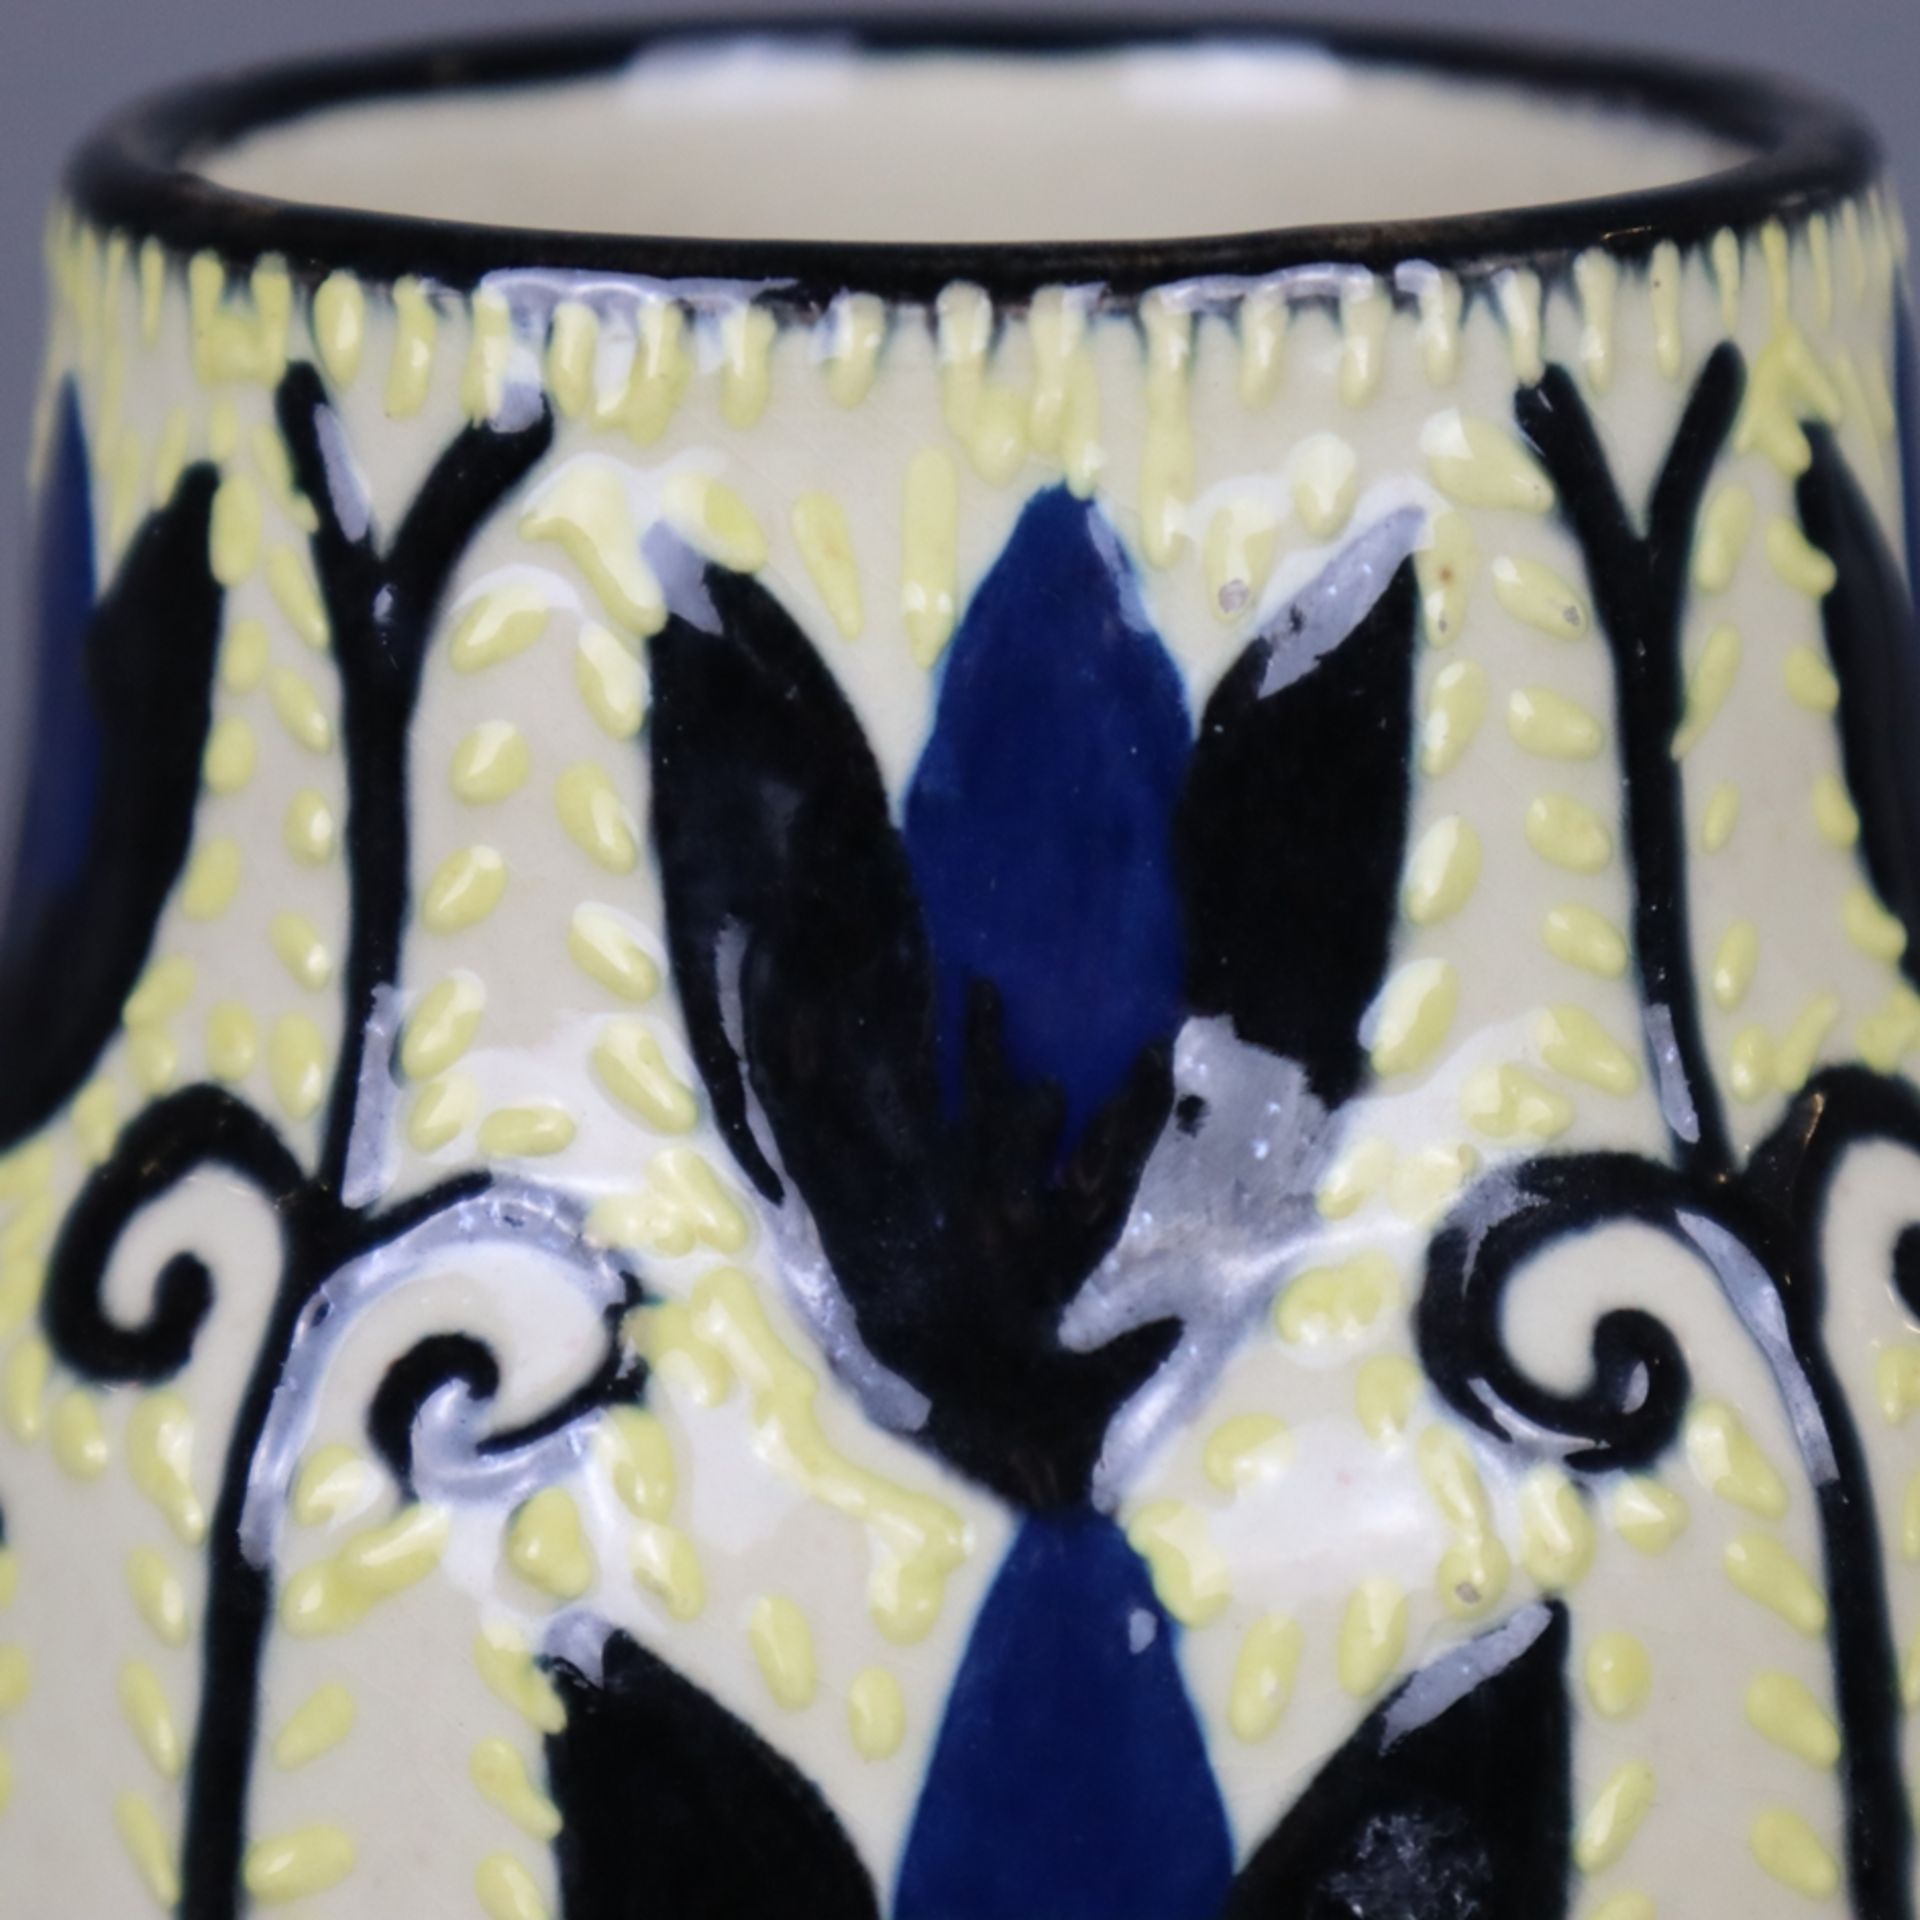 Keramikvase - Tonwerke Kandern, nach 1915, Mod.nr.: 953, konisch zulaufende For - Image 5 of 6